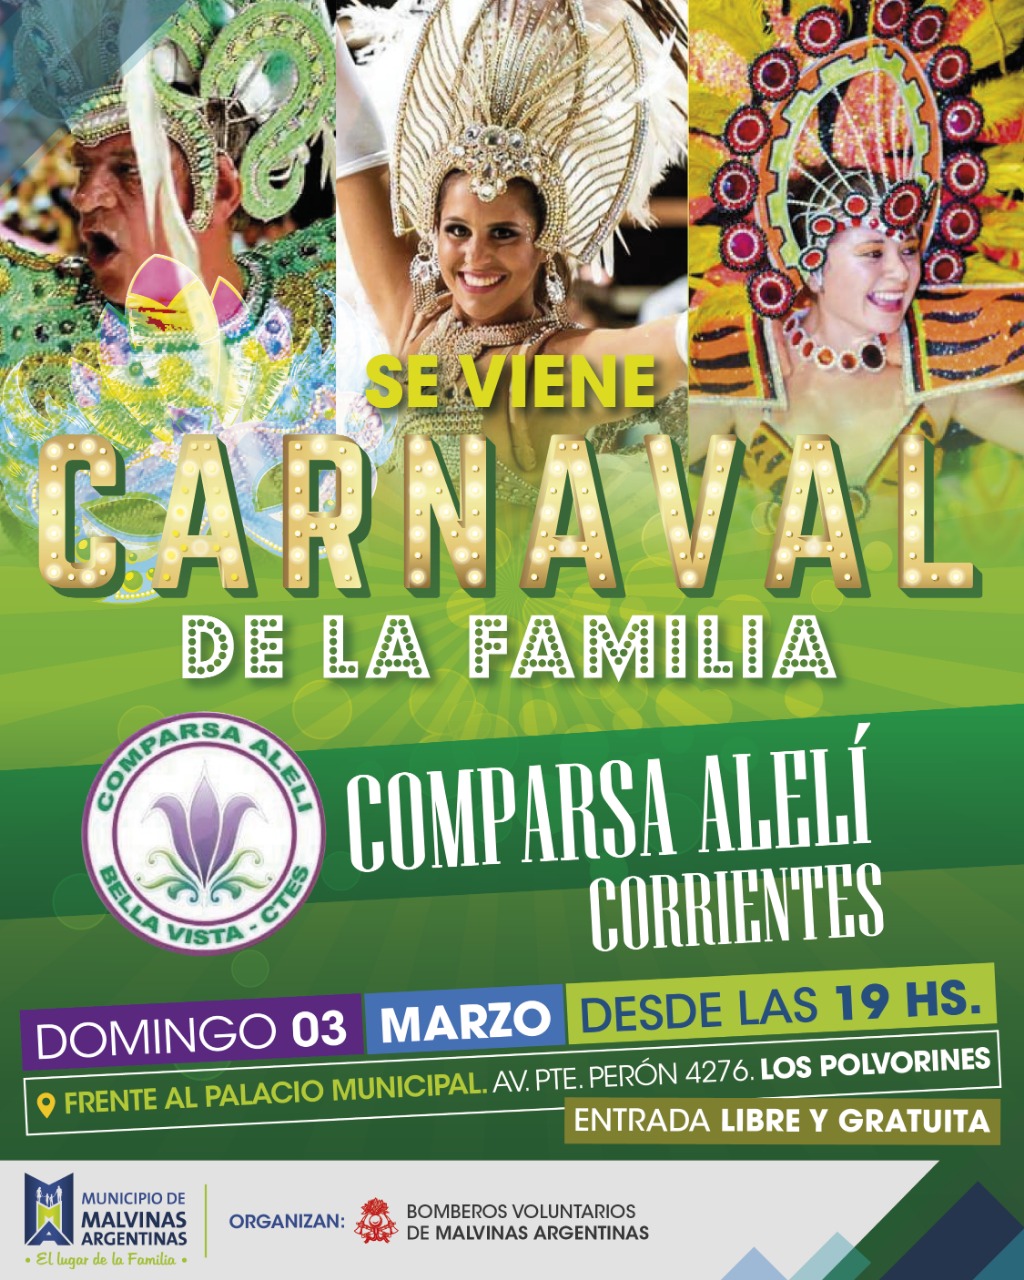  Se viene el “Carnaval de la Familia”